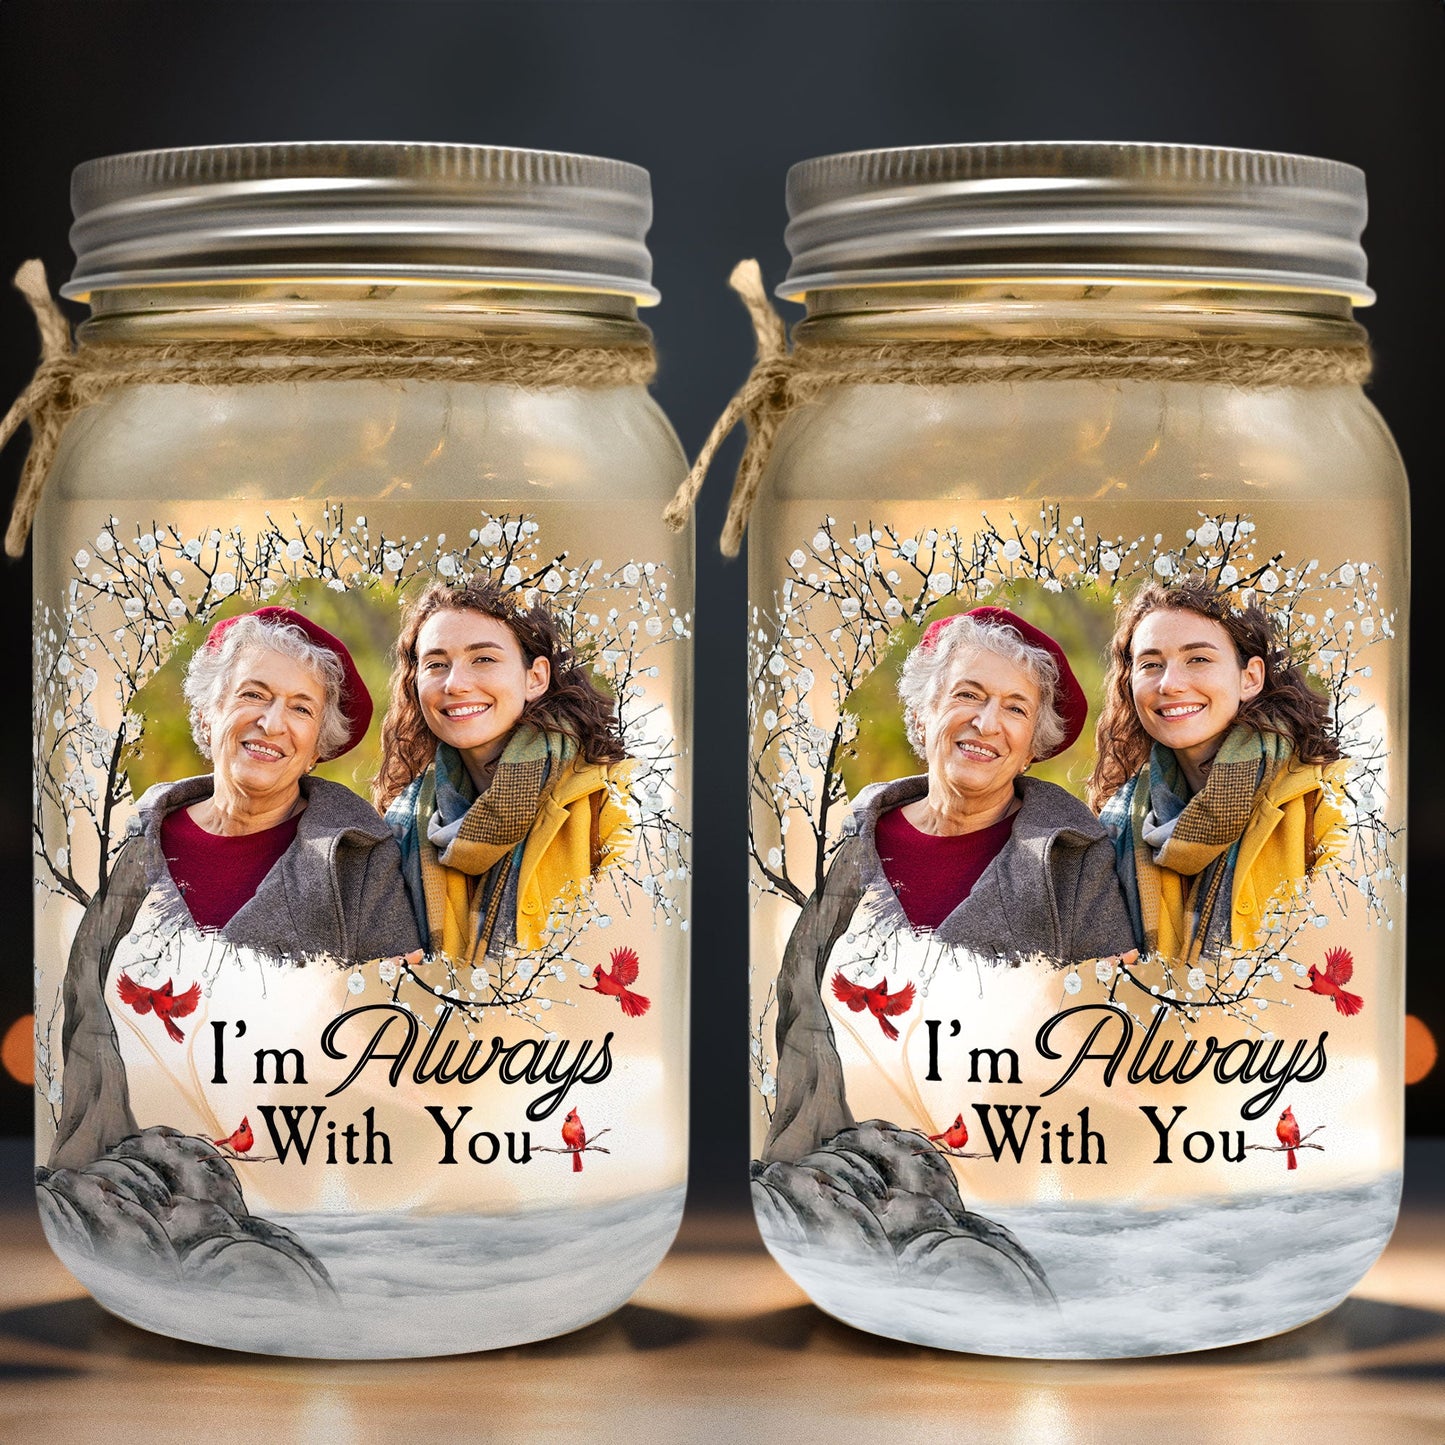 I'm Always With You - Personalized Photo Mason Jar Light